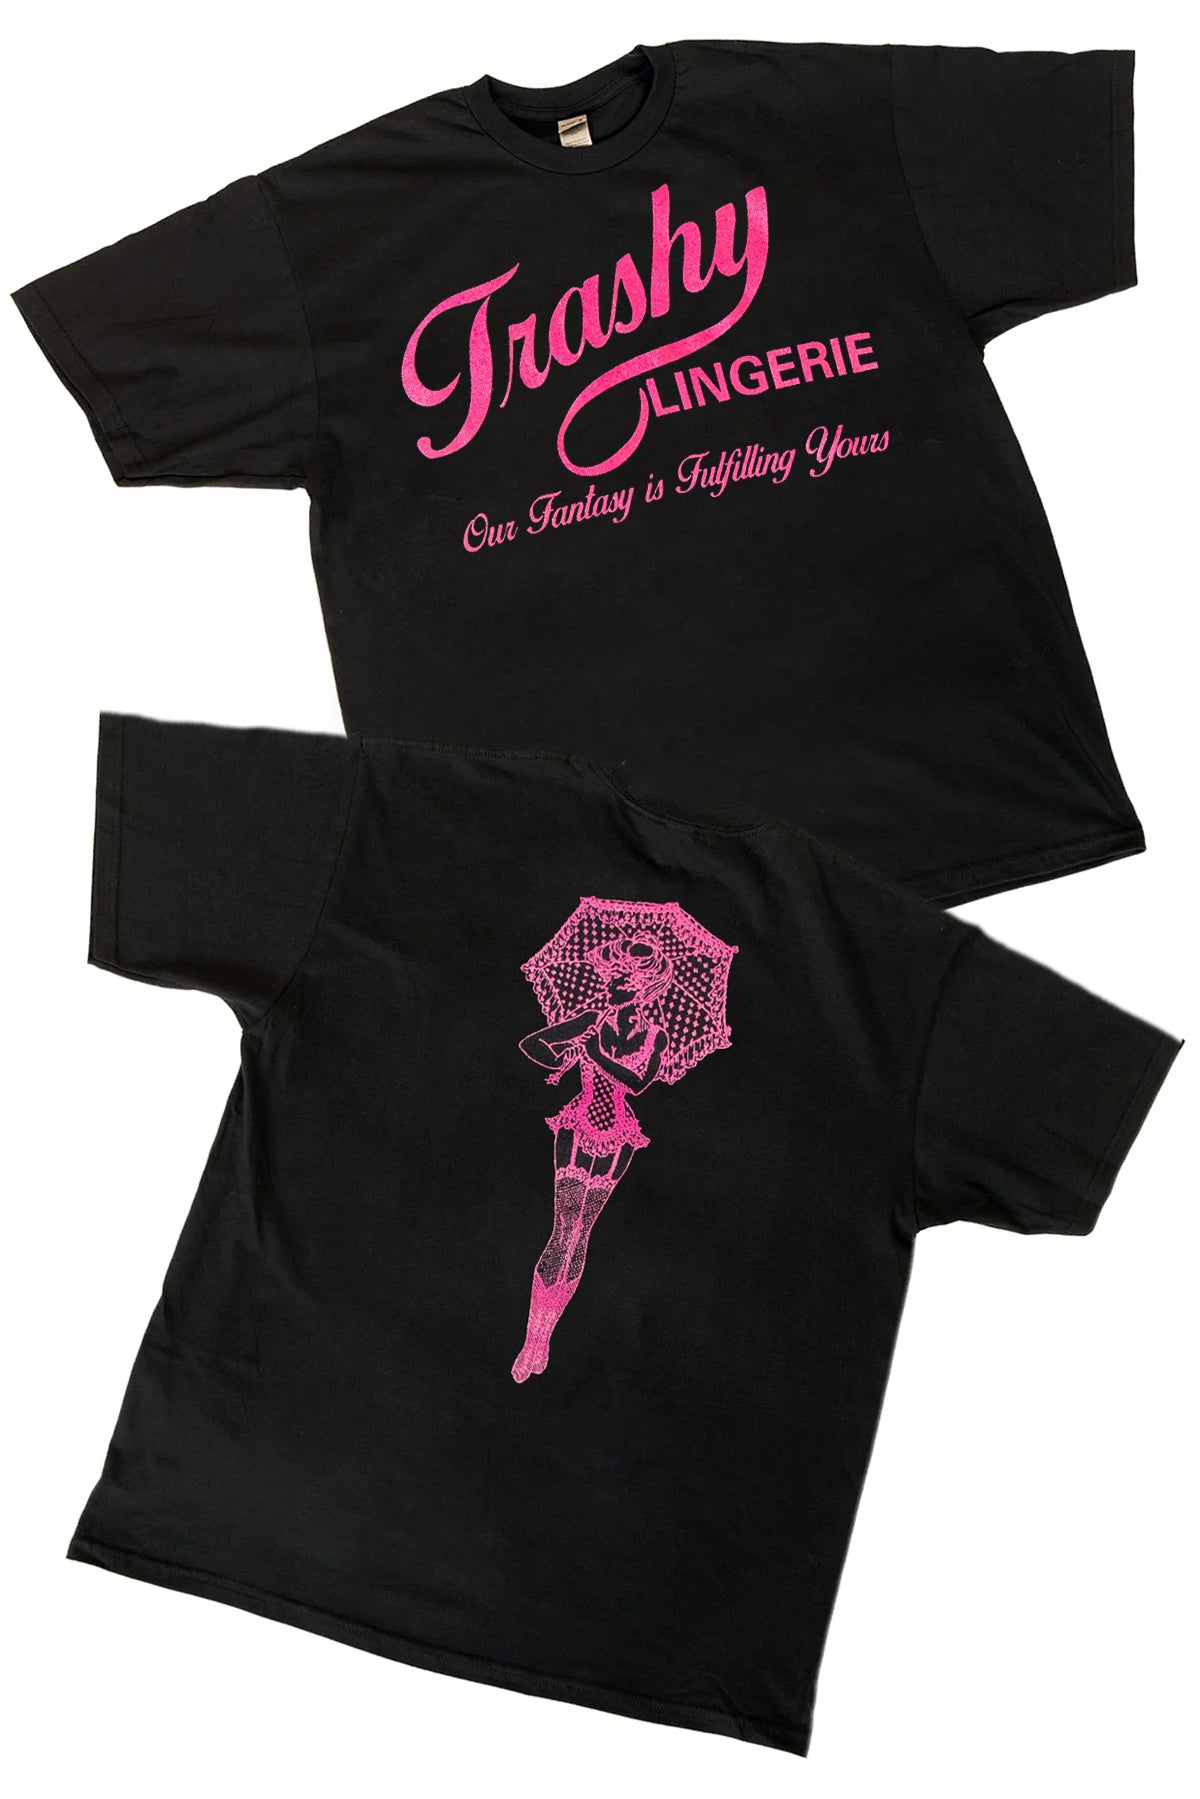 Trashy Unisex Black/Hot Pink T-Shirt